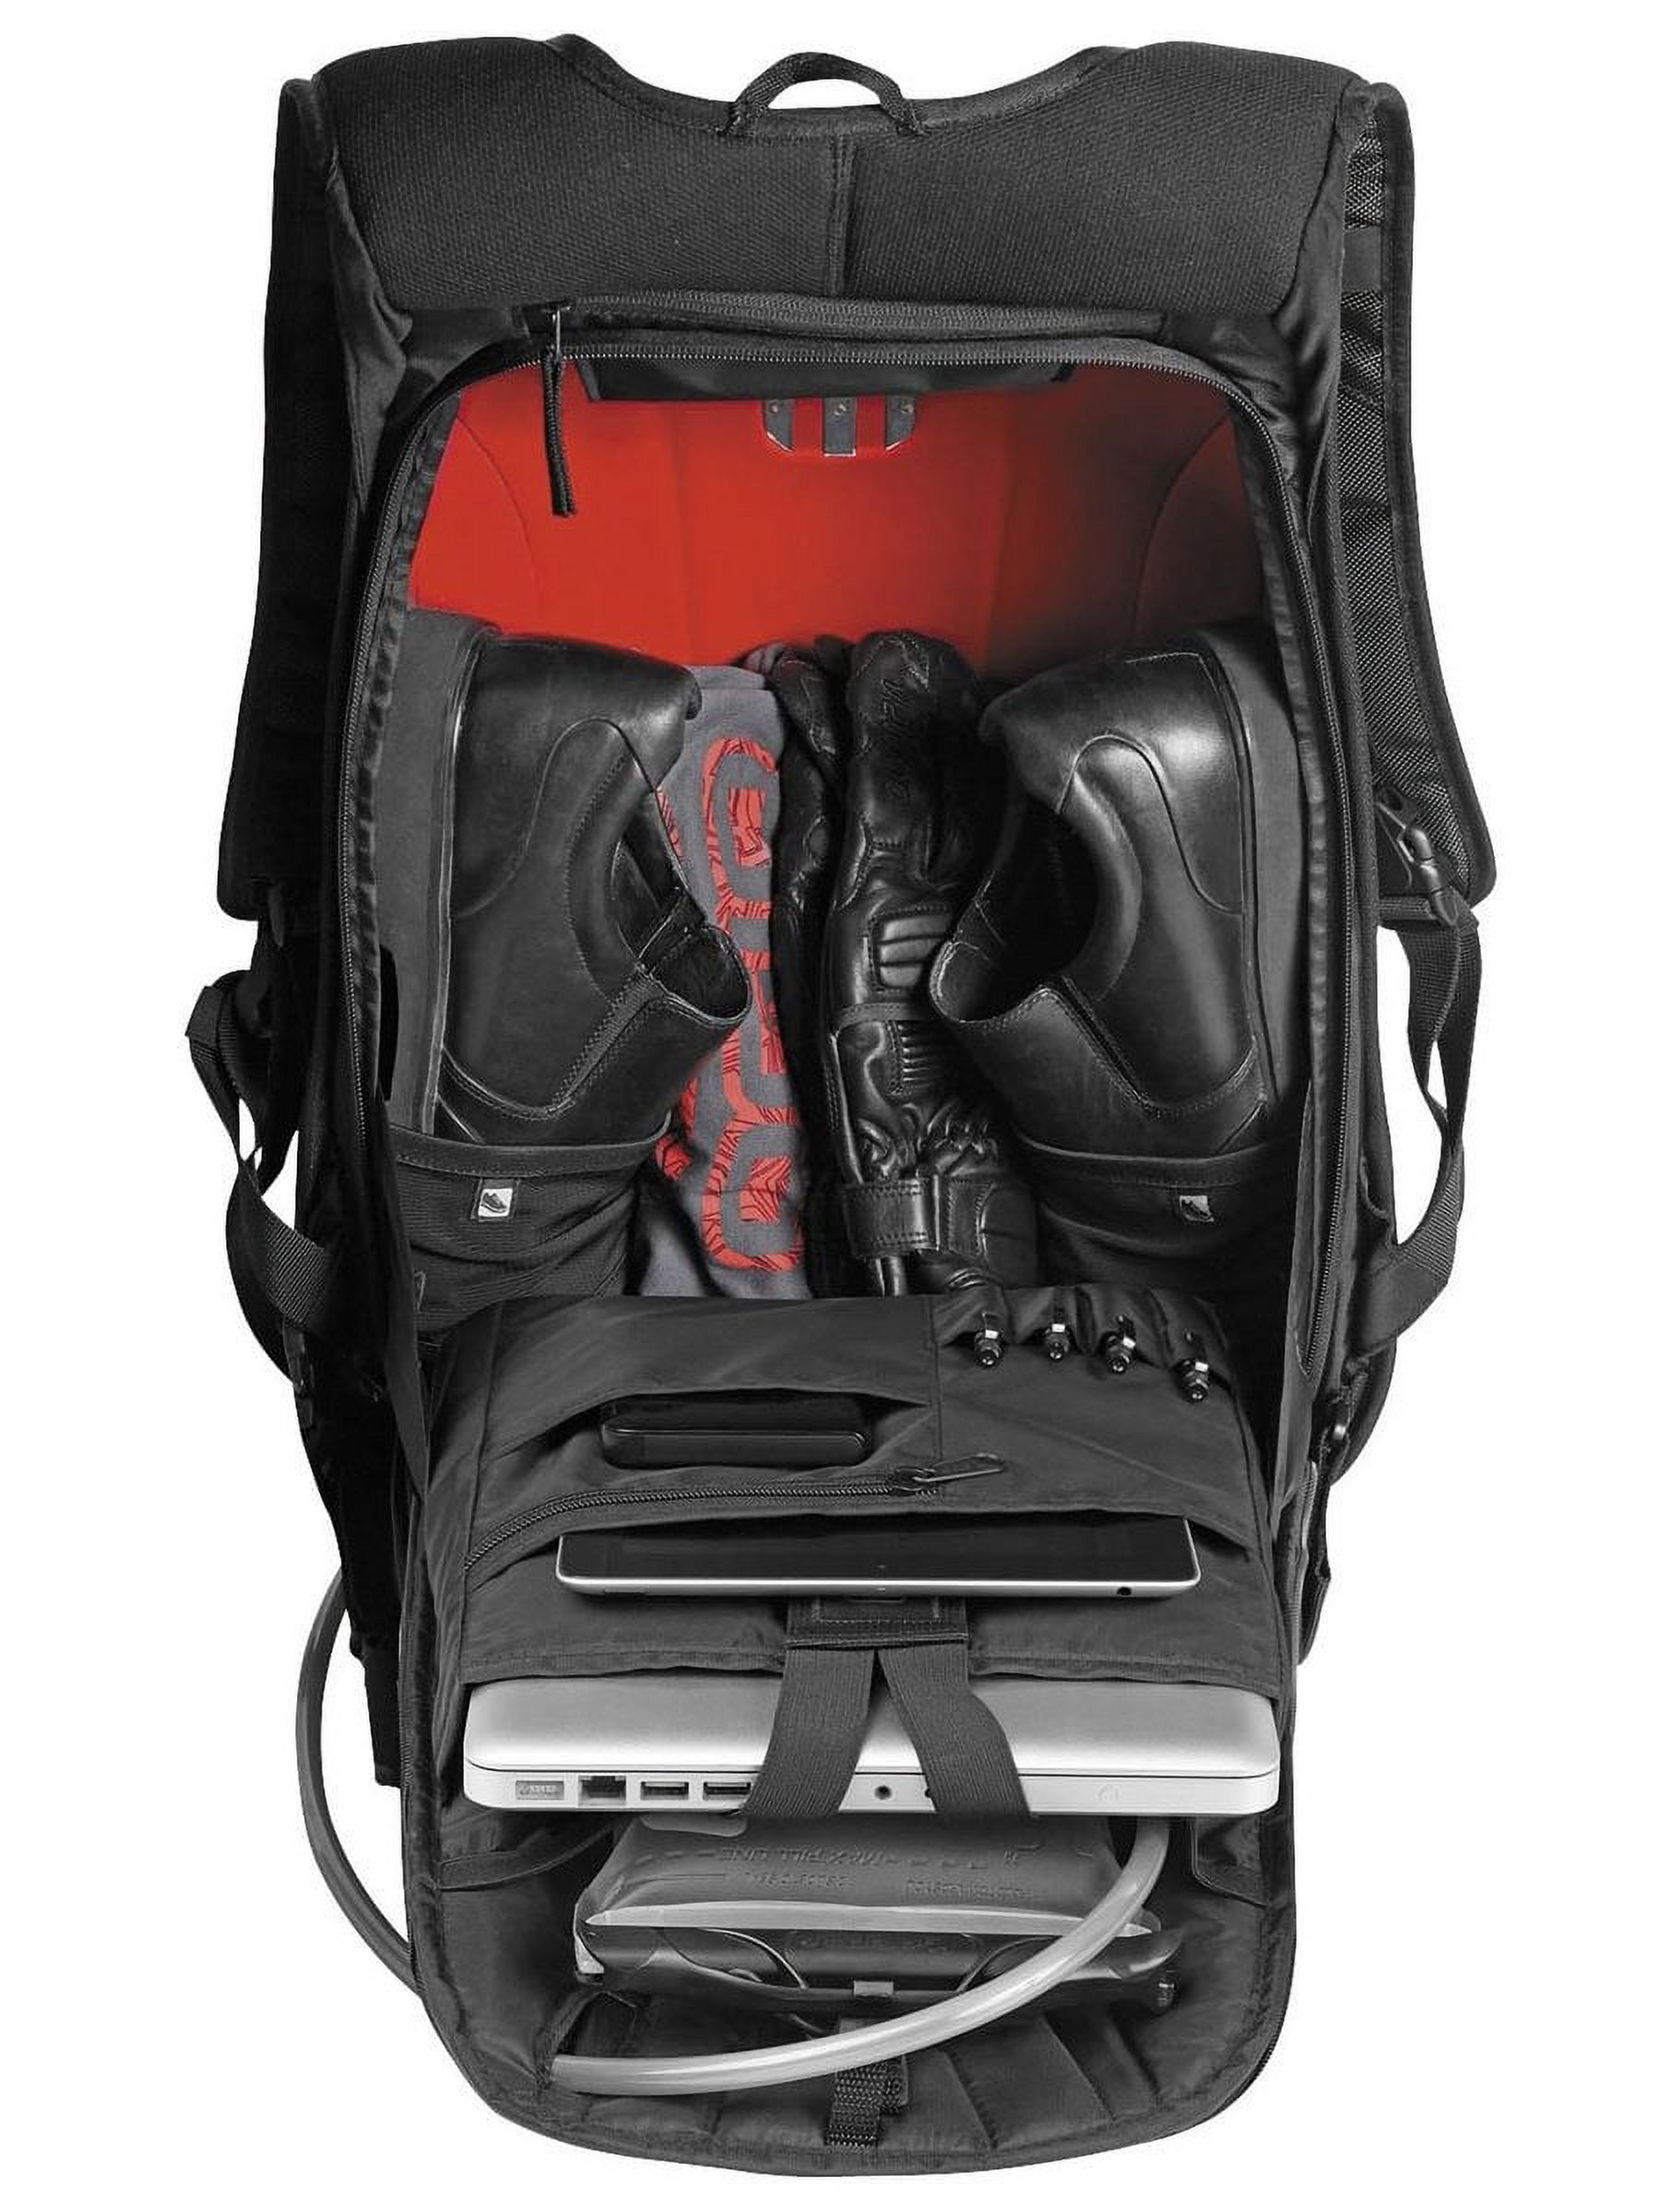 Stealth Ogio No Drag Mach 3 Backpack - image 2 of 2